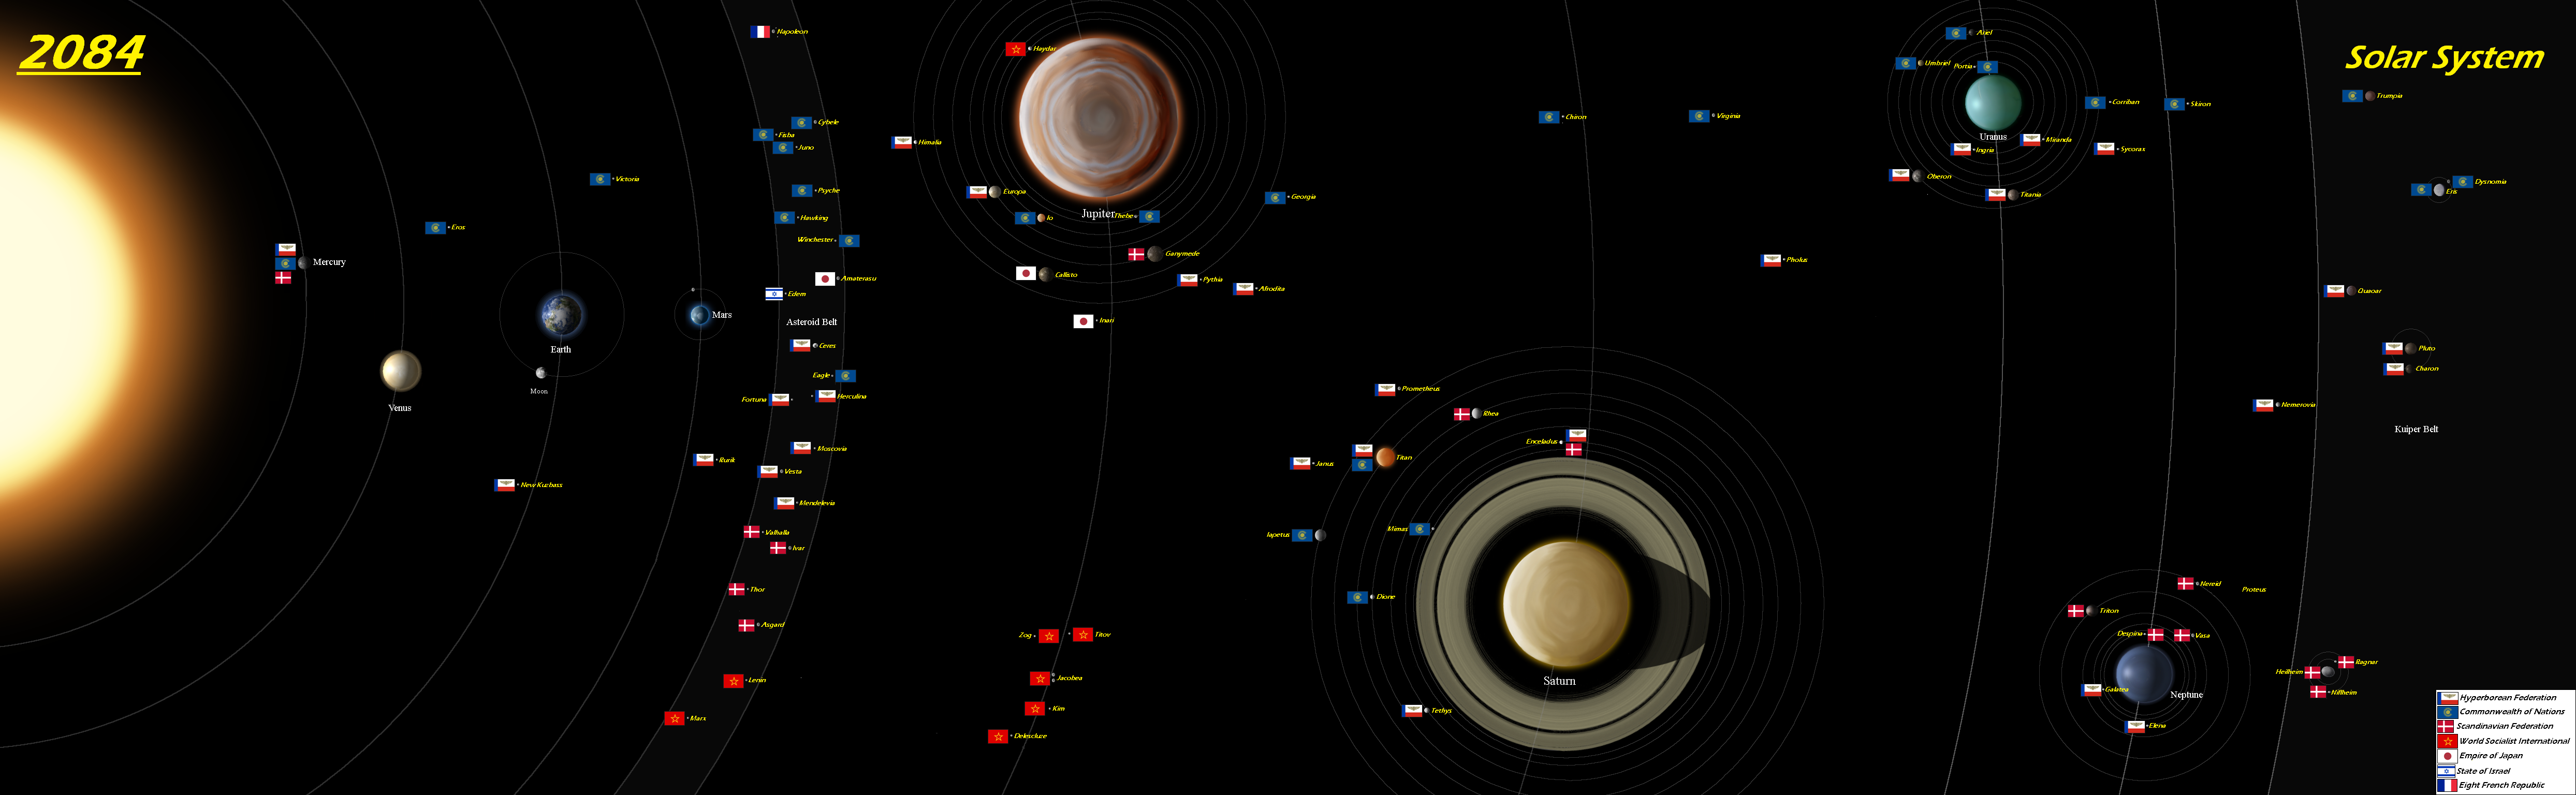 Solar System (Rise of the Hyperboreans) by Metallist-99 on DeviantArt